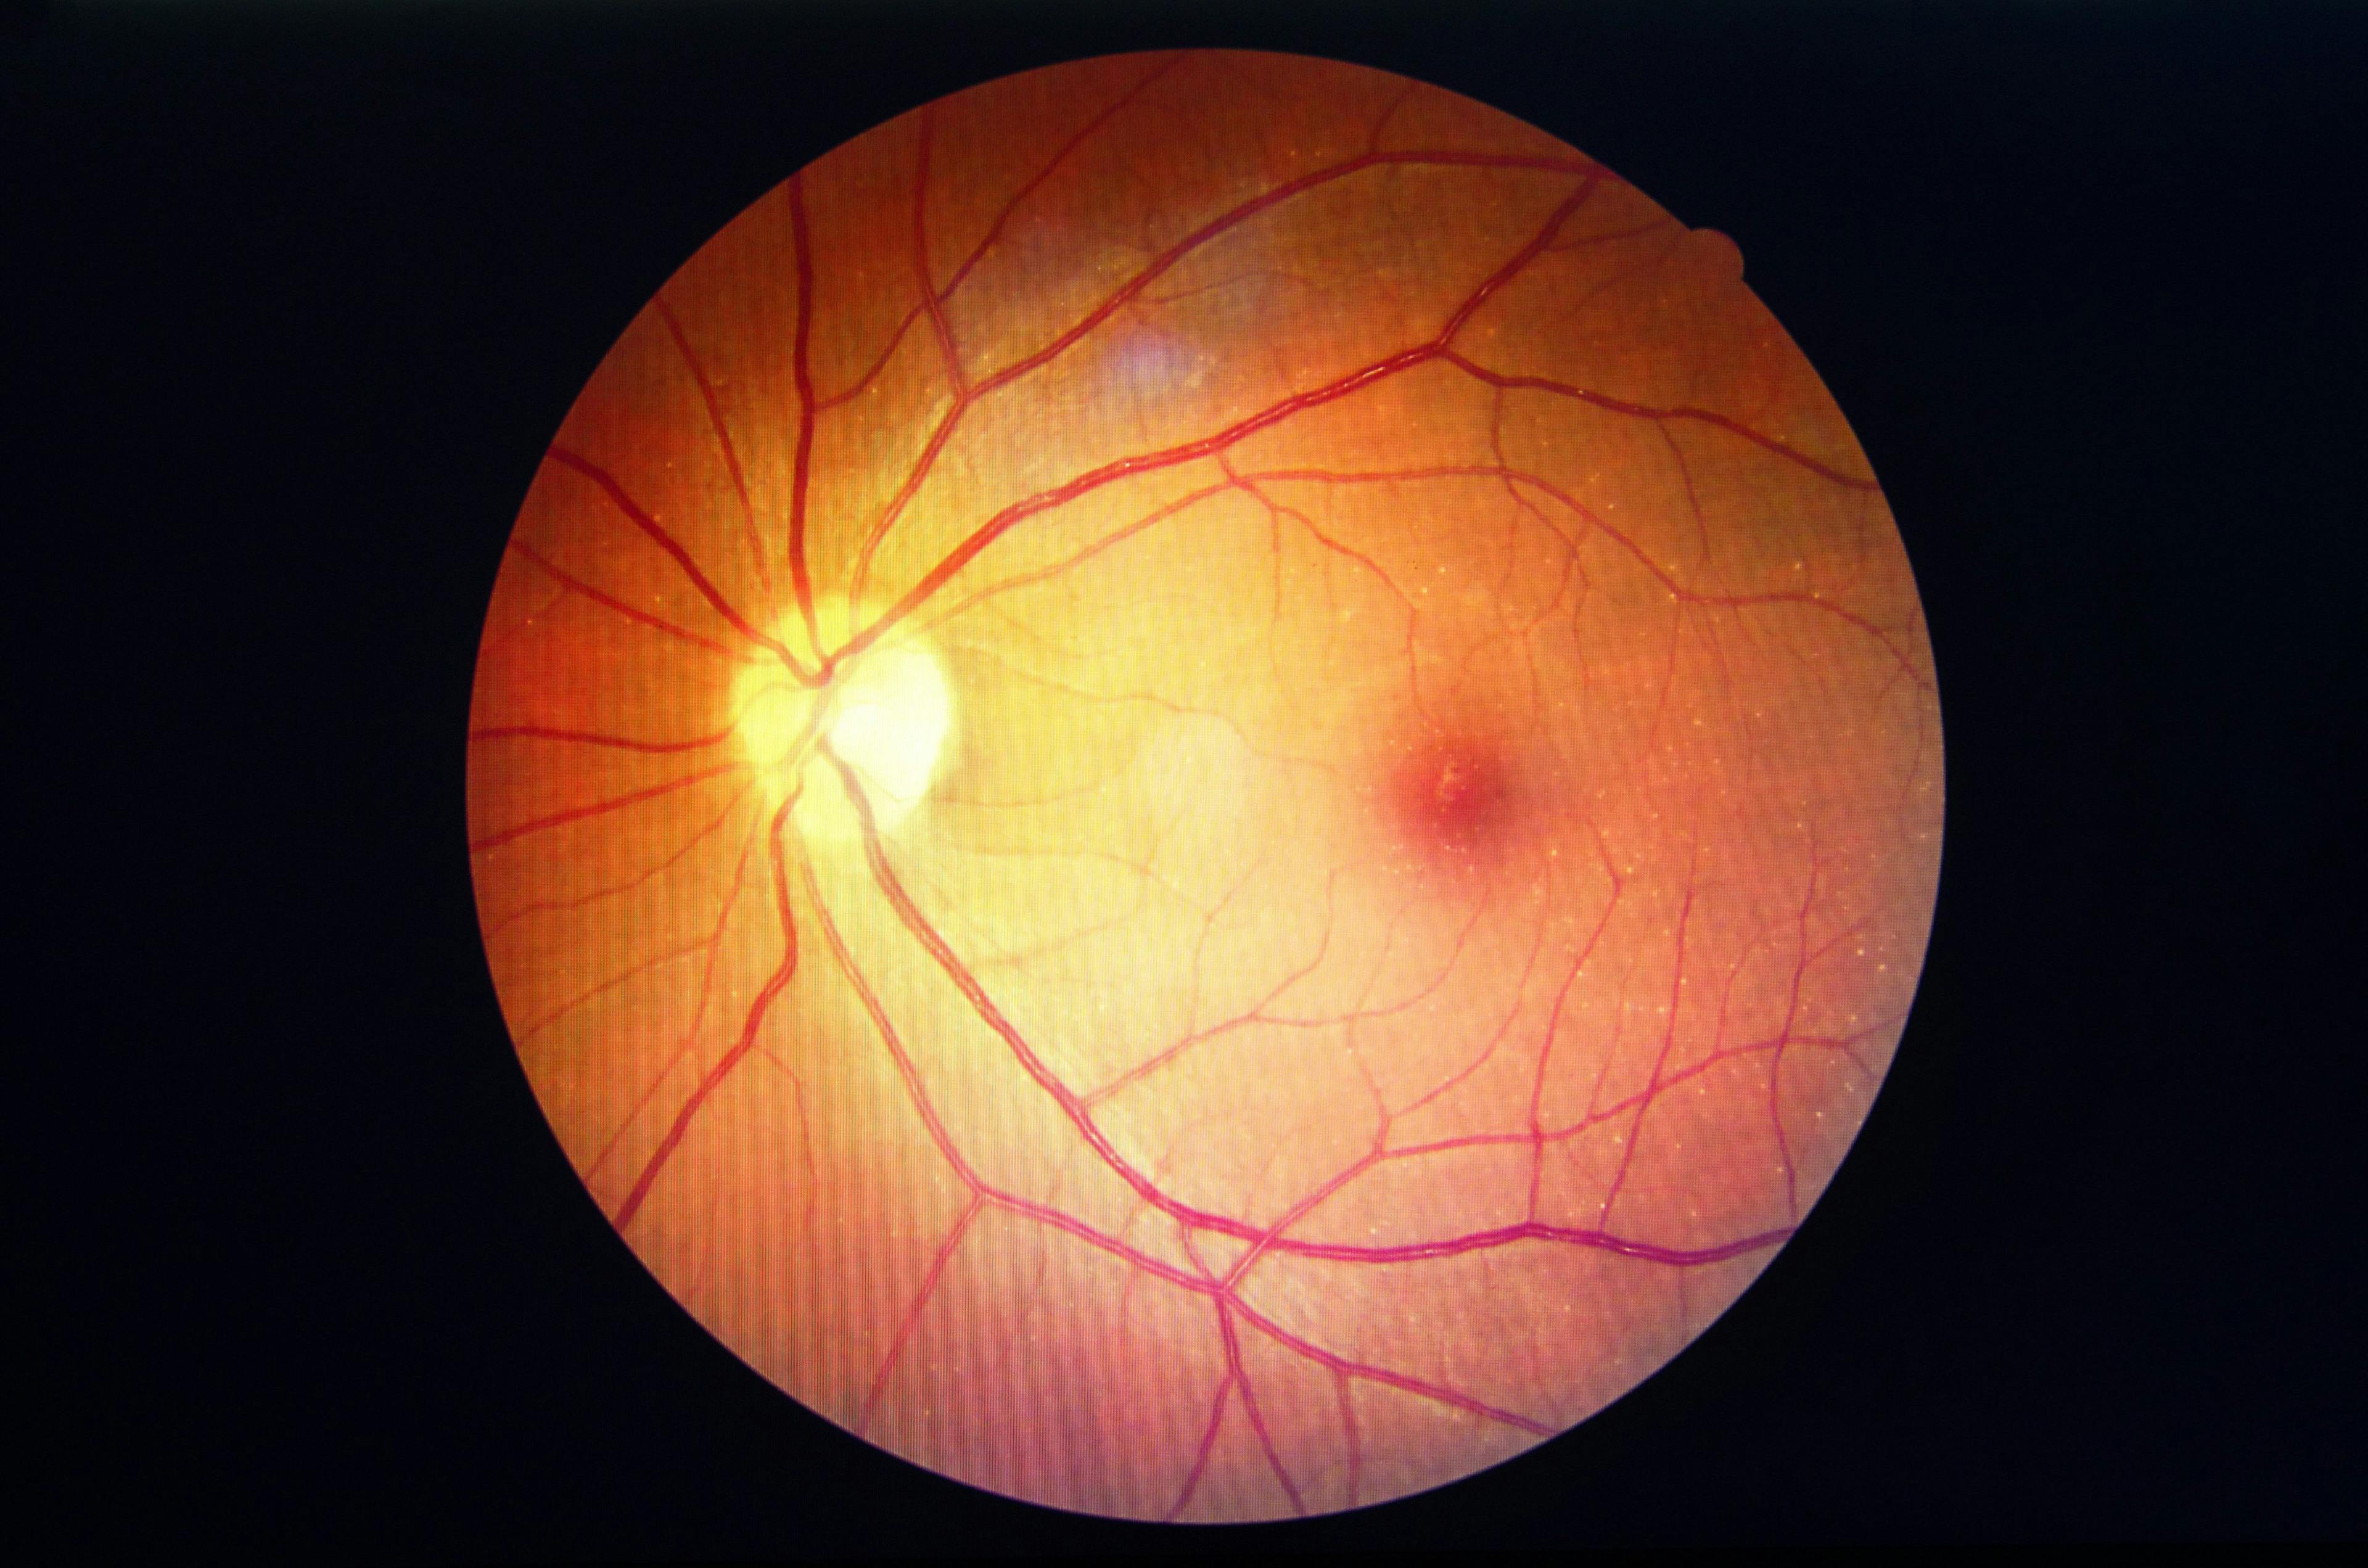 Hydroxychloroquine retinopathy in lupus patients. 